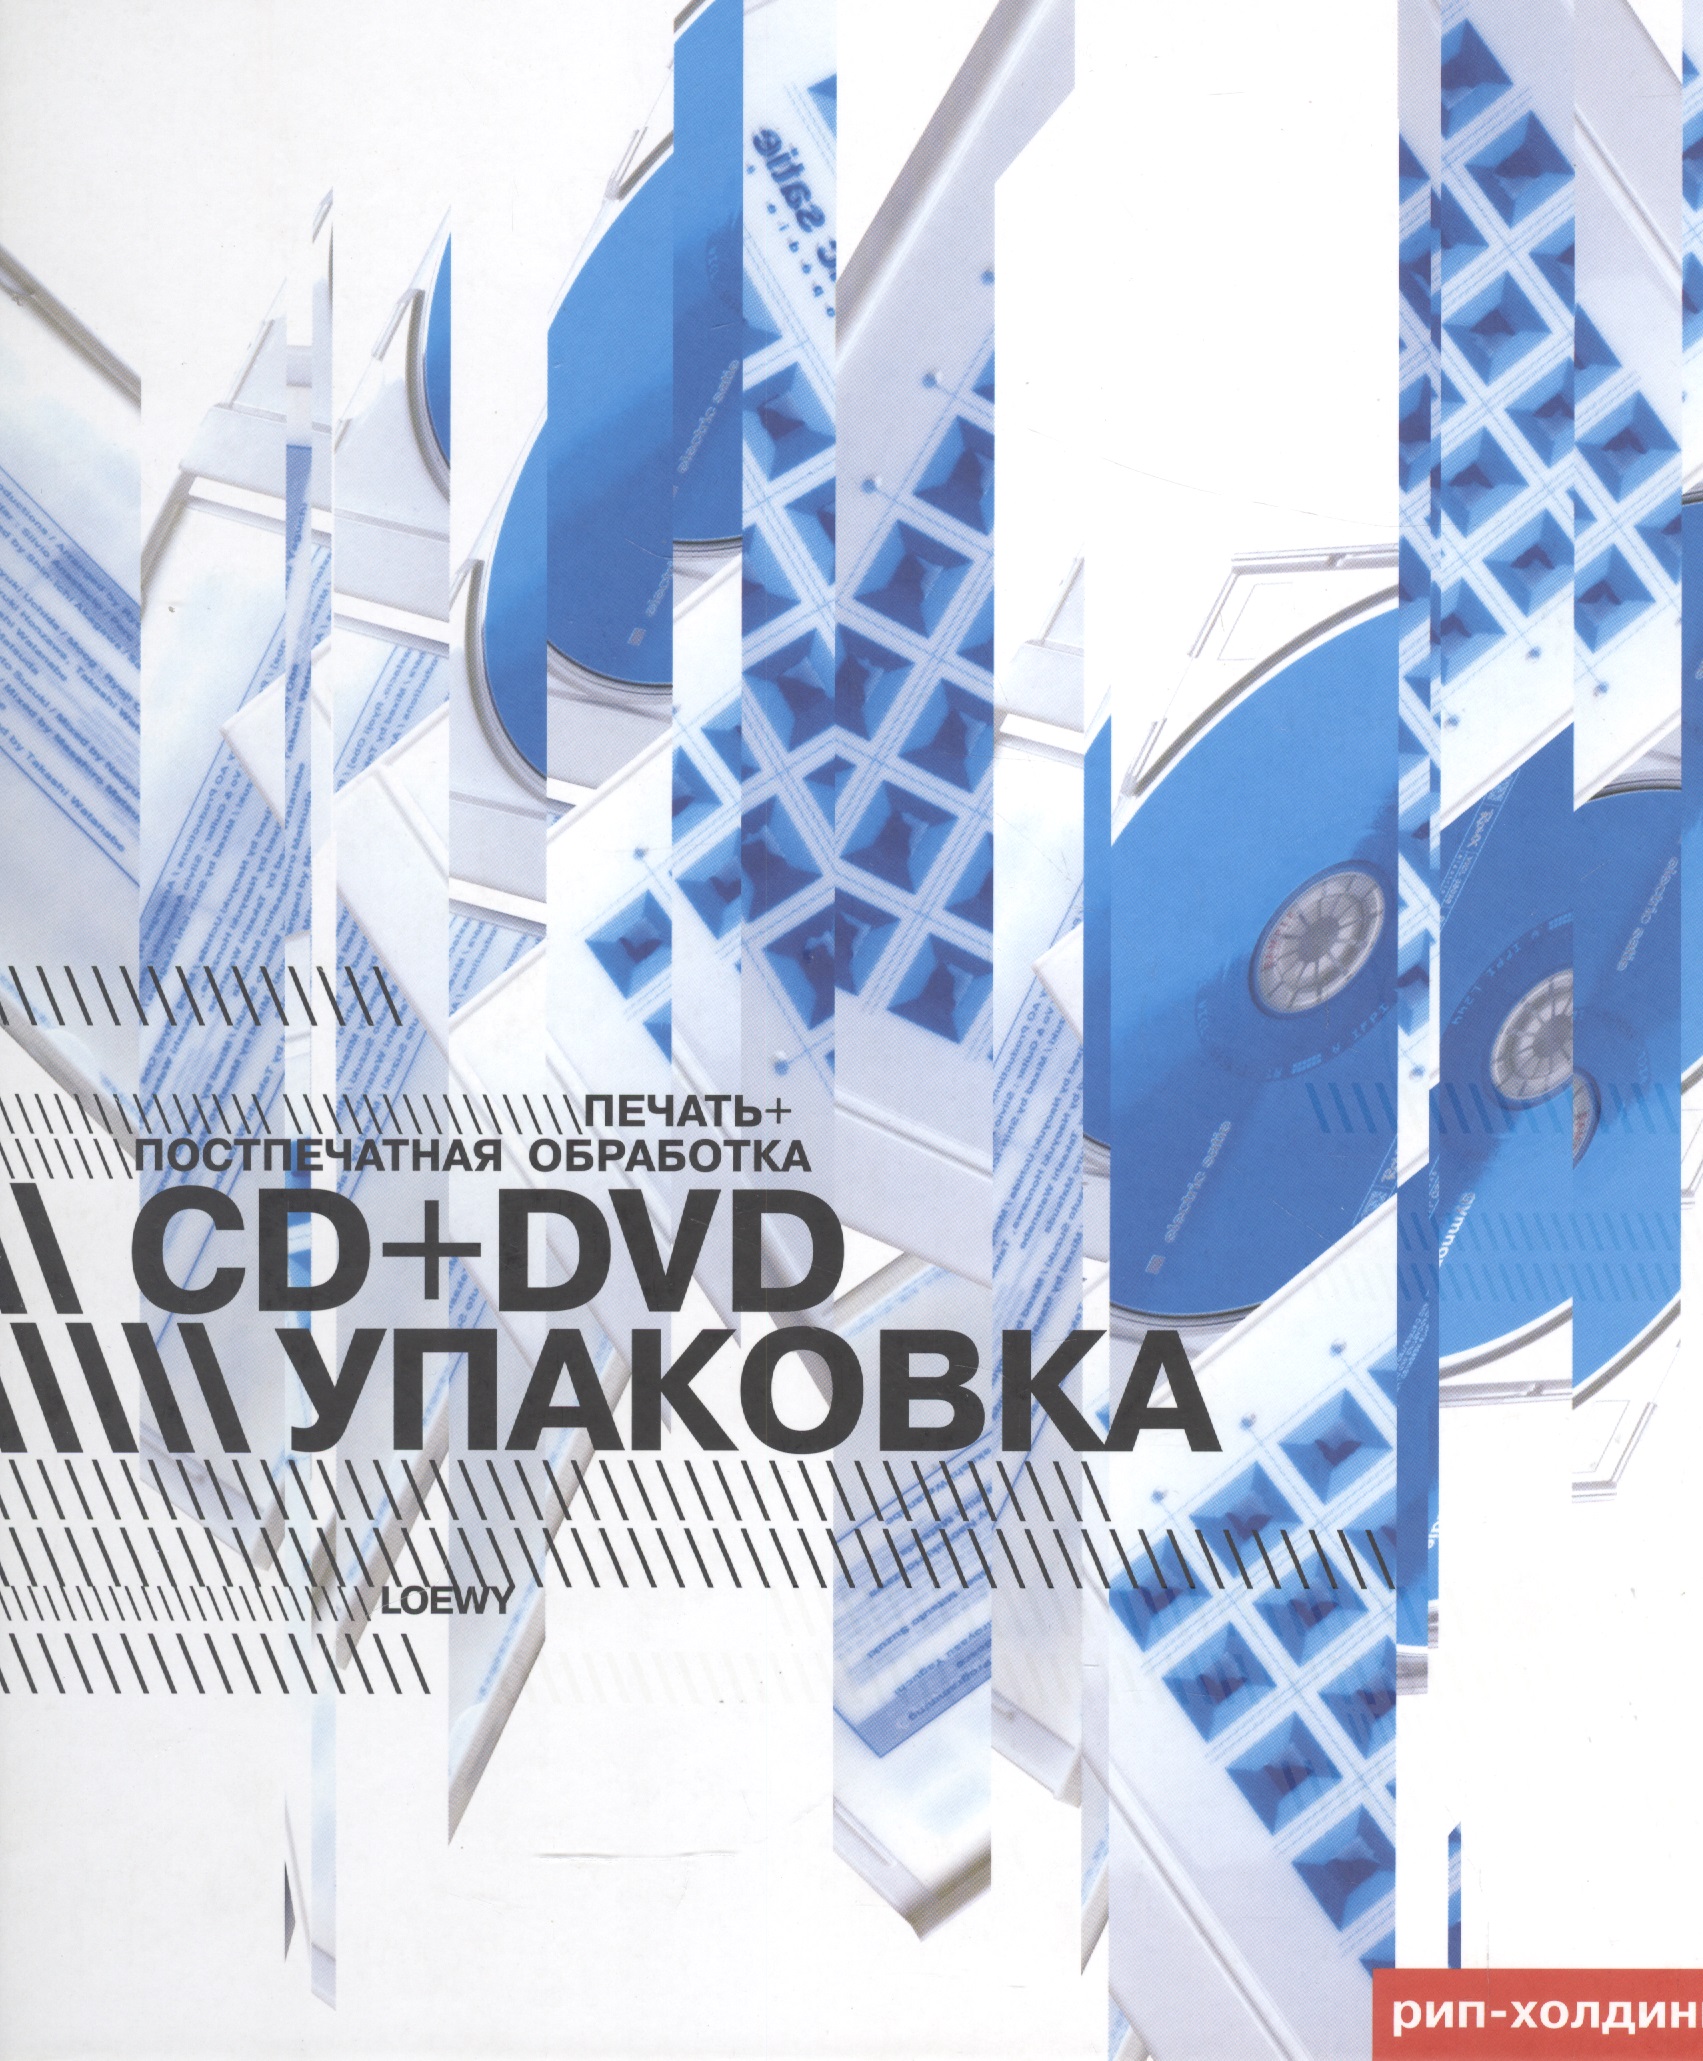 CD+DVD . + 